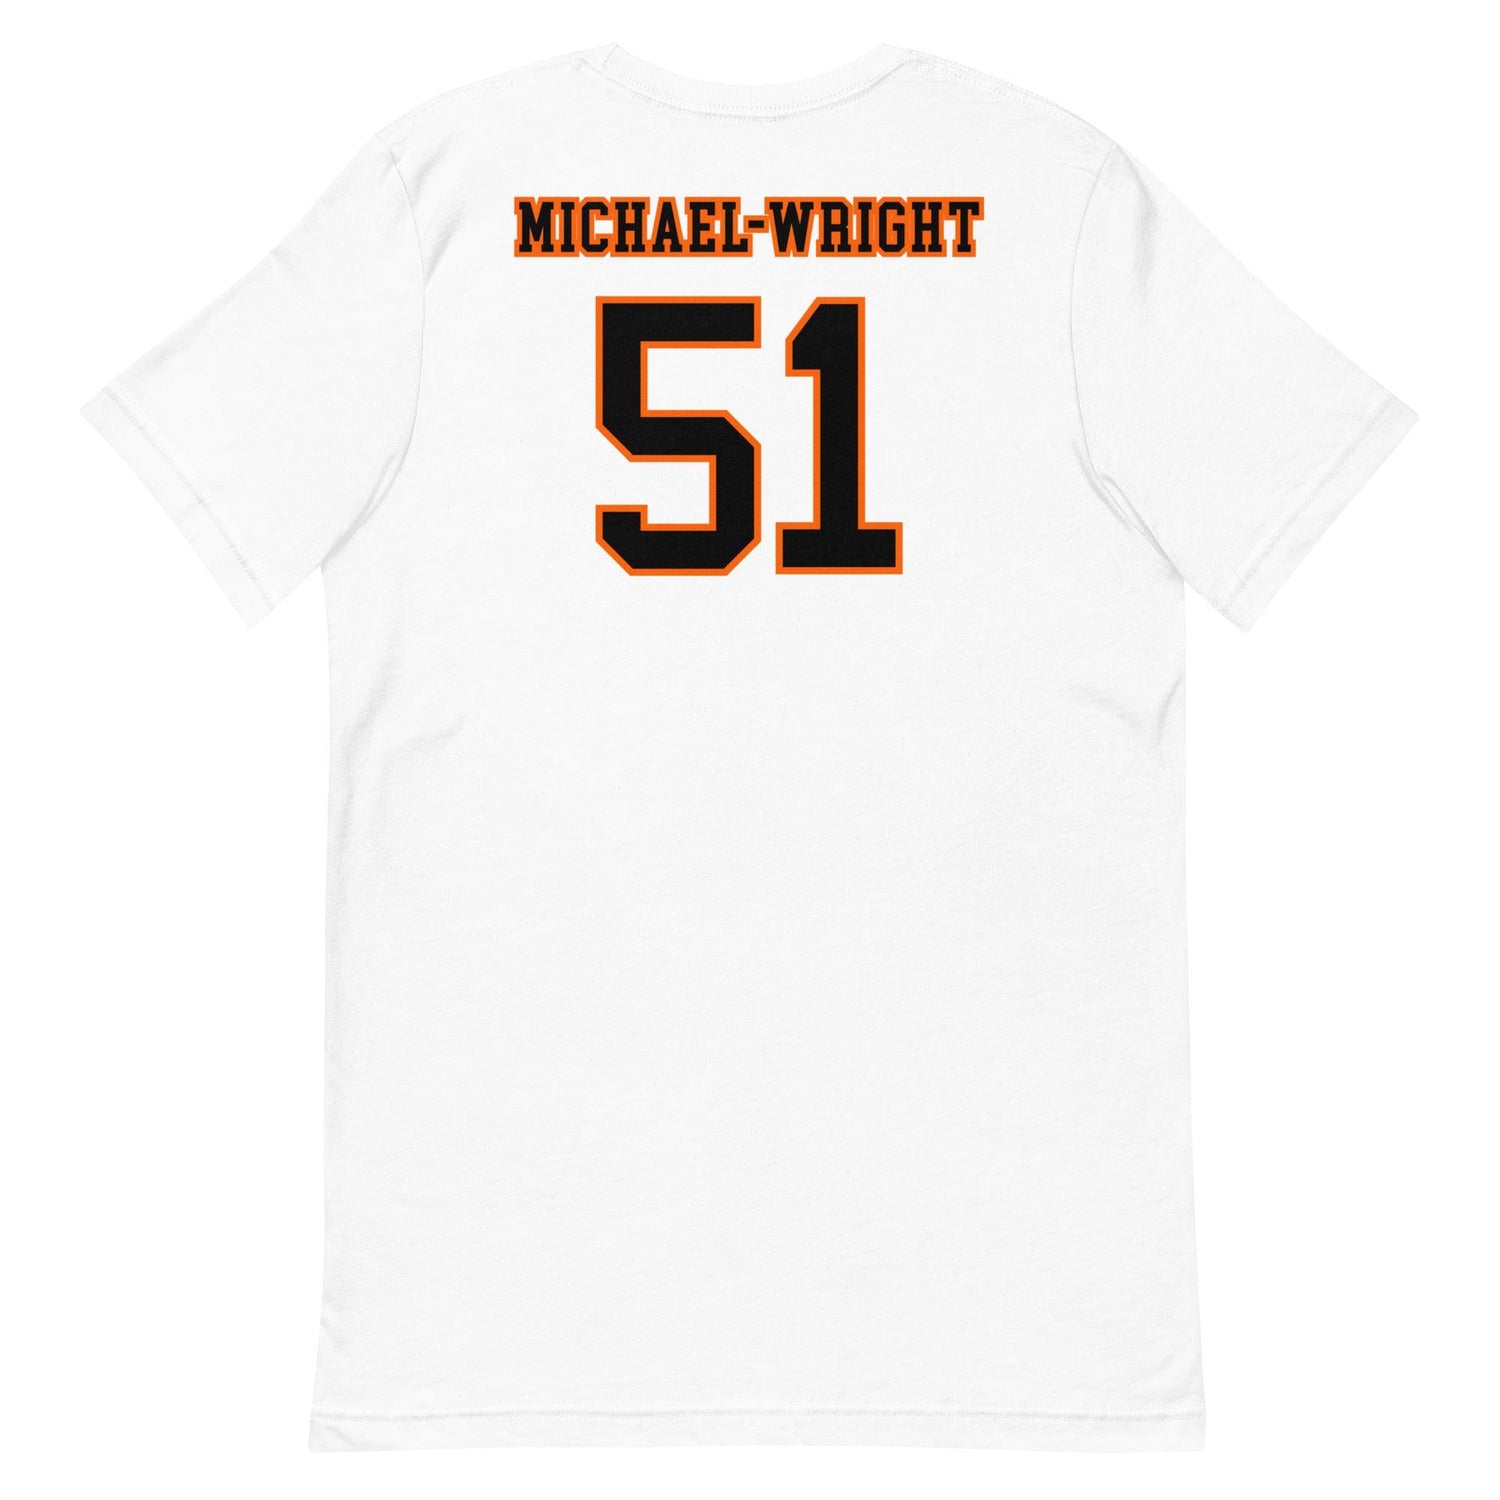 John Michael-Wright "Jersey" t-shirt - Fan Arch